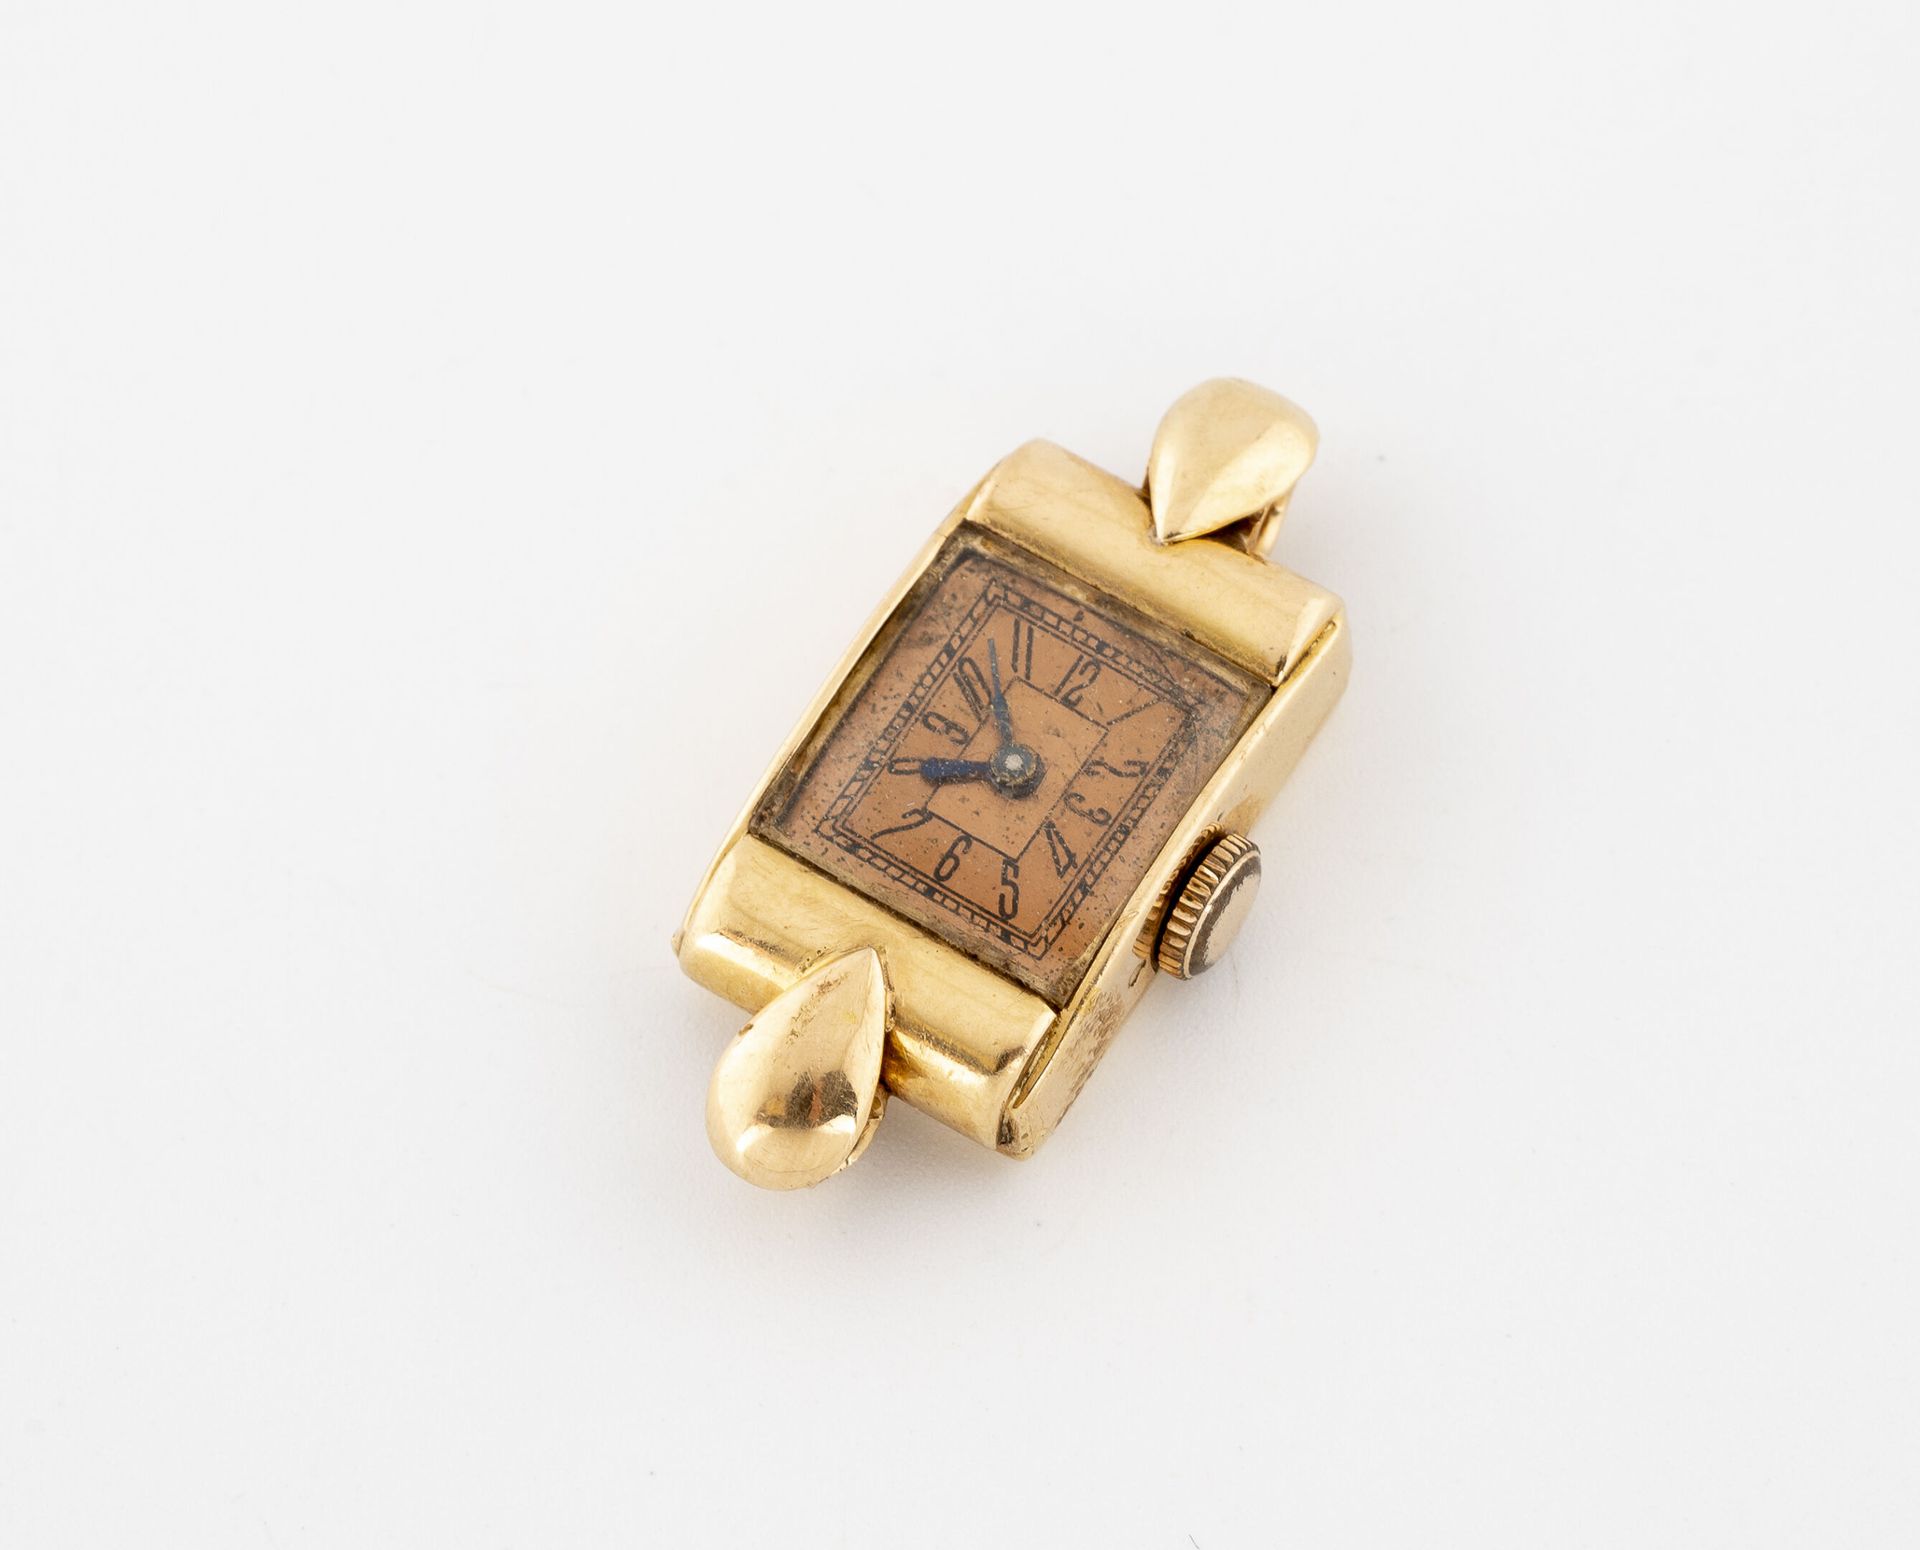 Null Caja rectangular de reloj de pulsera de oro amarillo (750).

Esfera con fon&hellip;